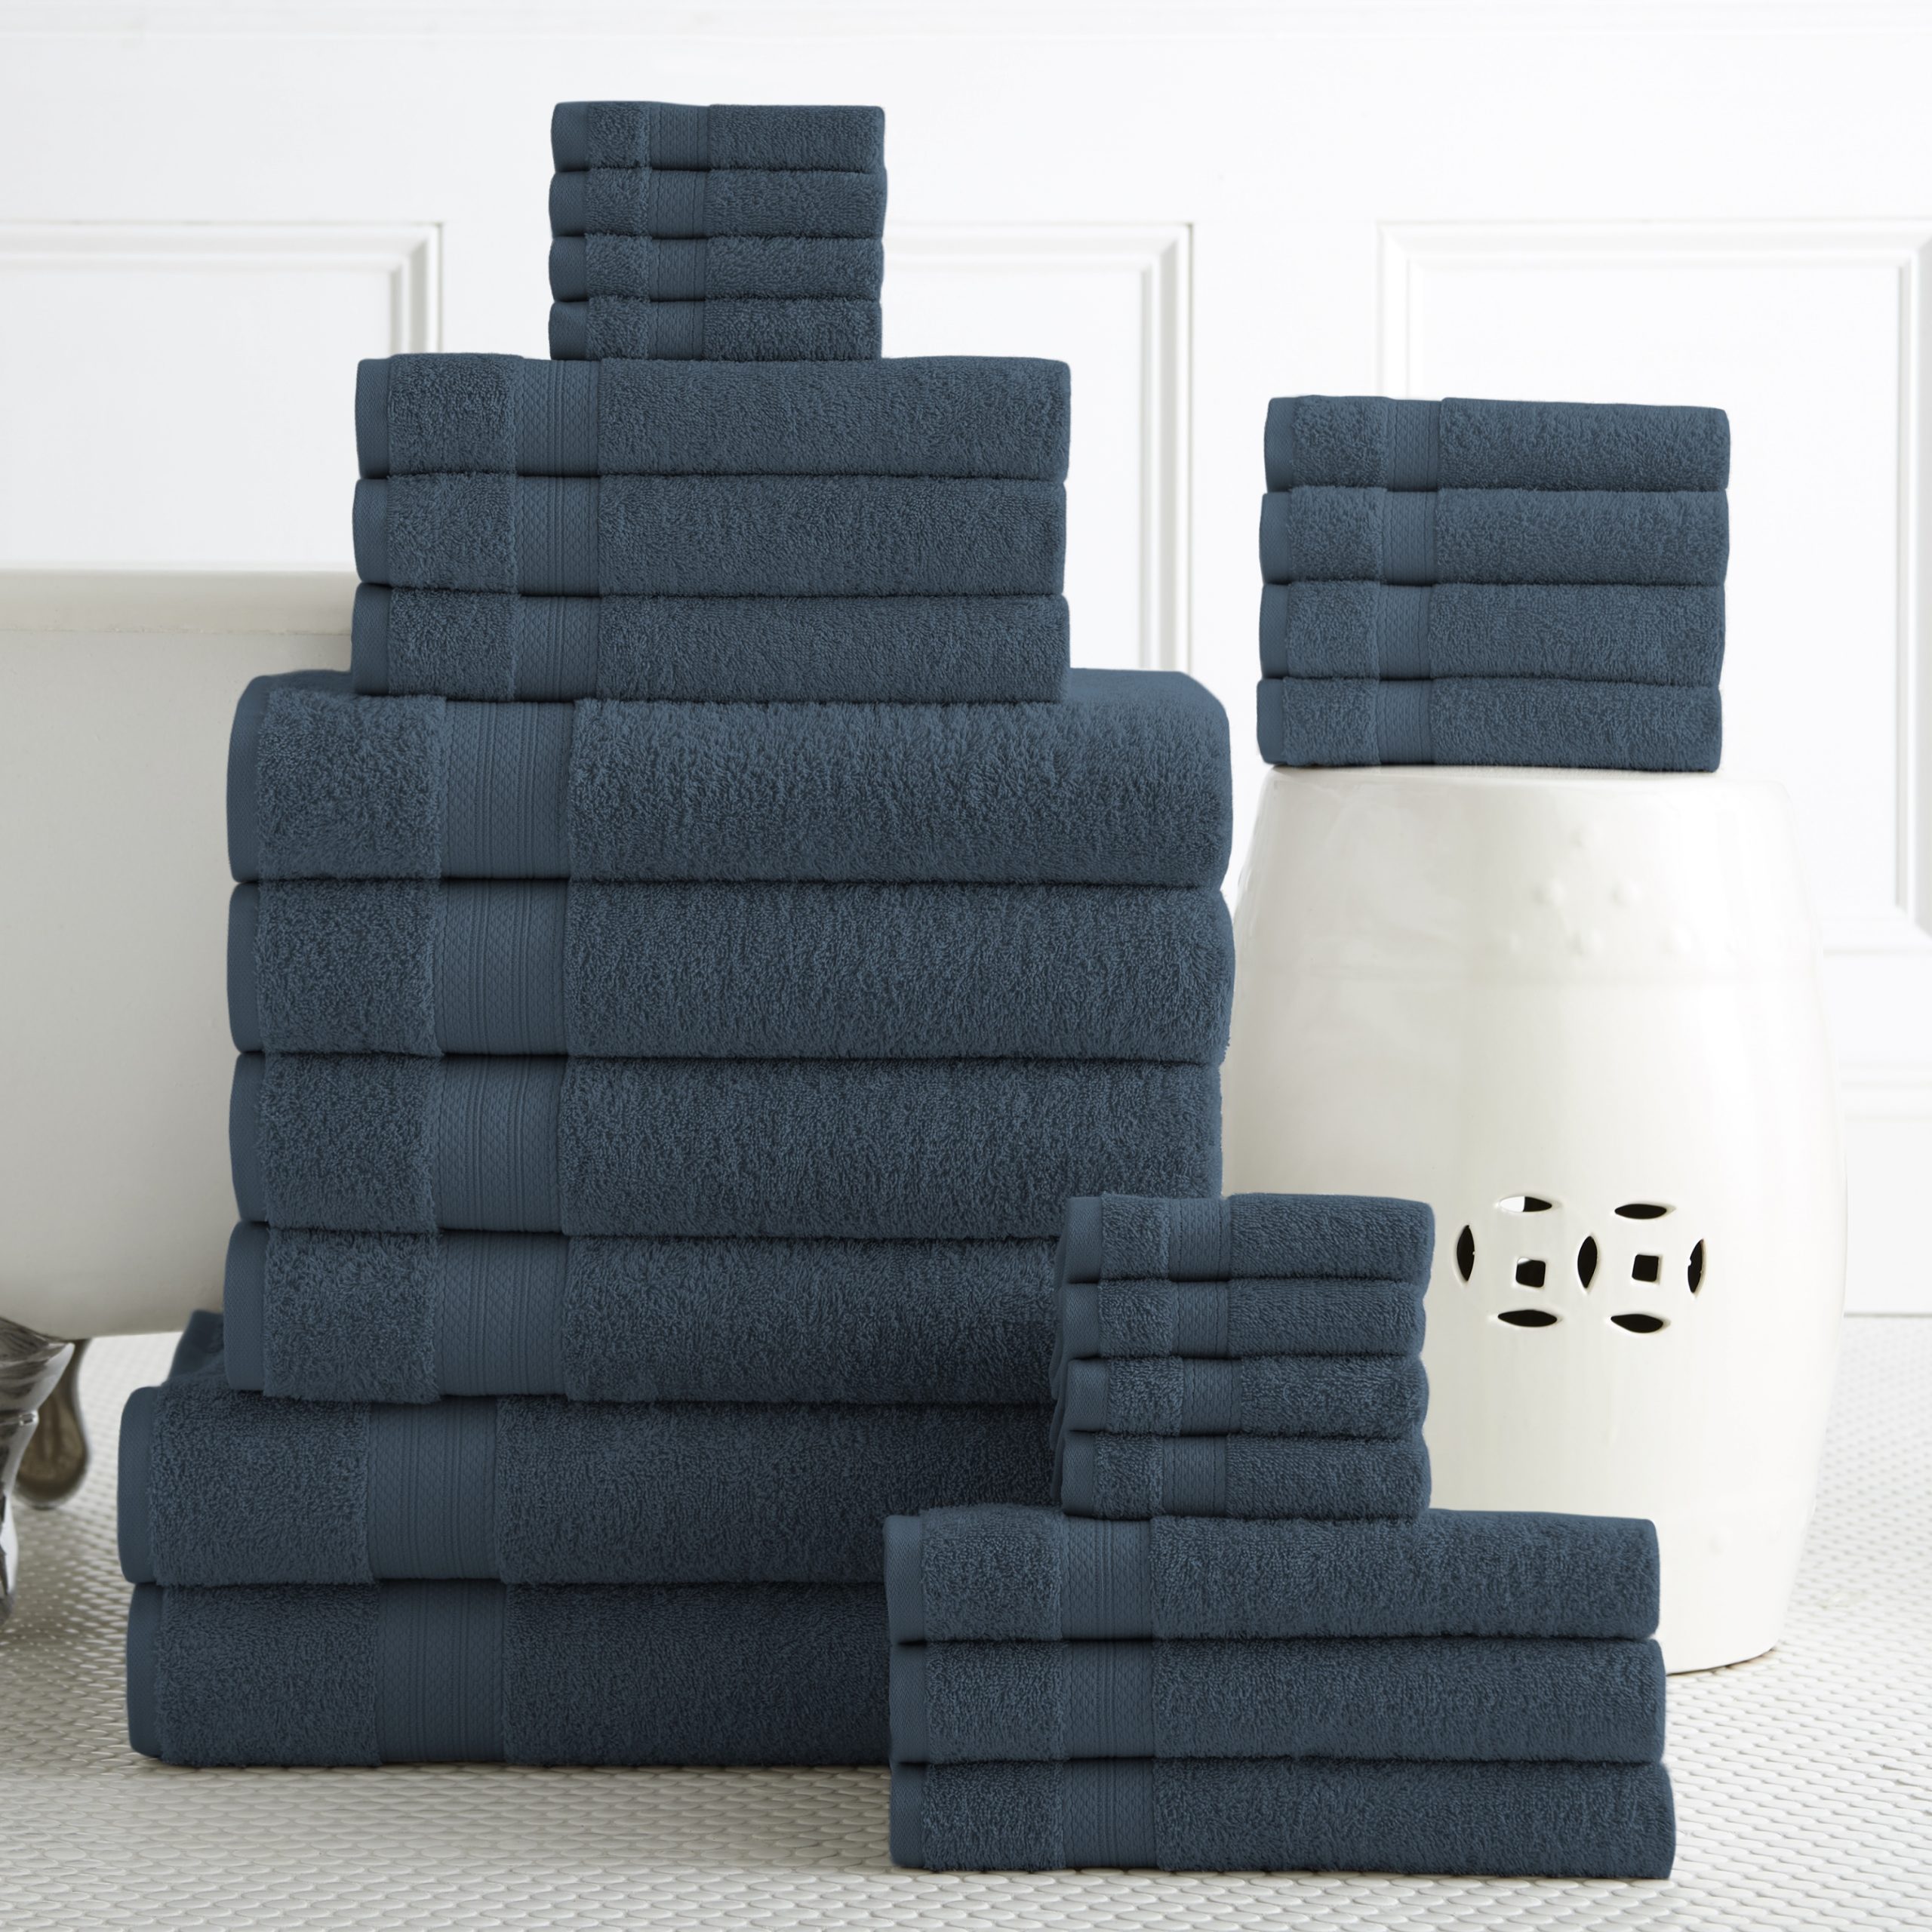 Addy Home Towel Set HOT Walmart Online SAVINGS!!